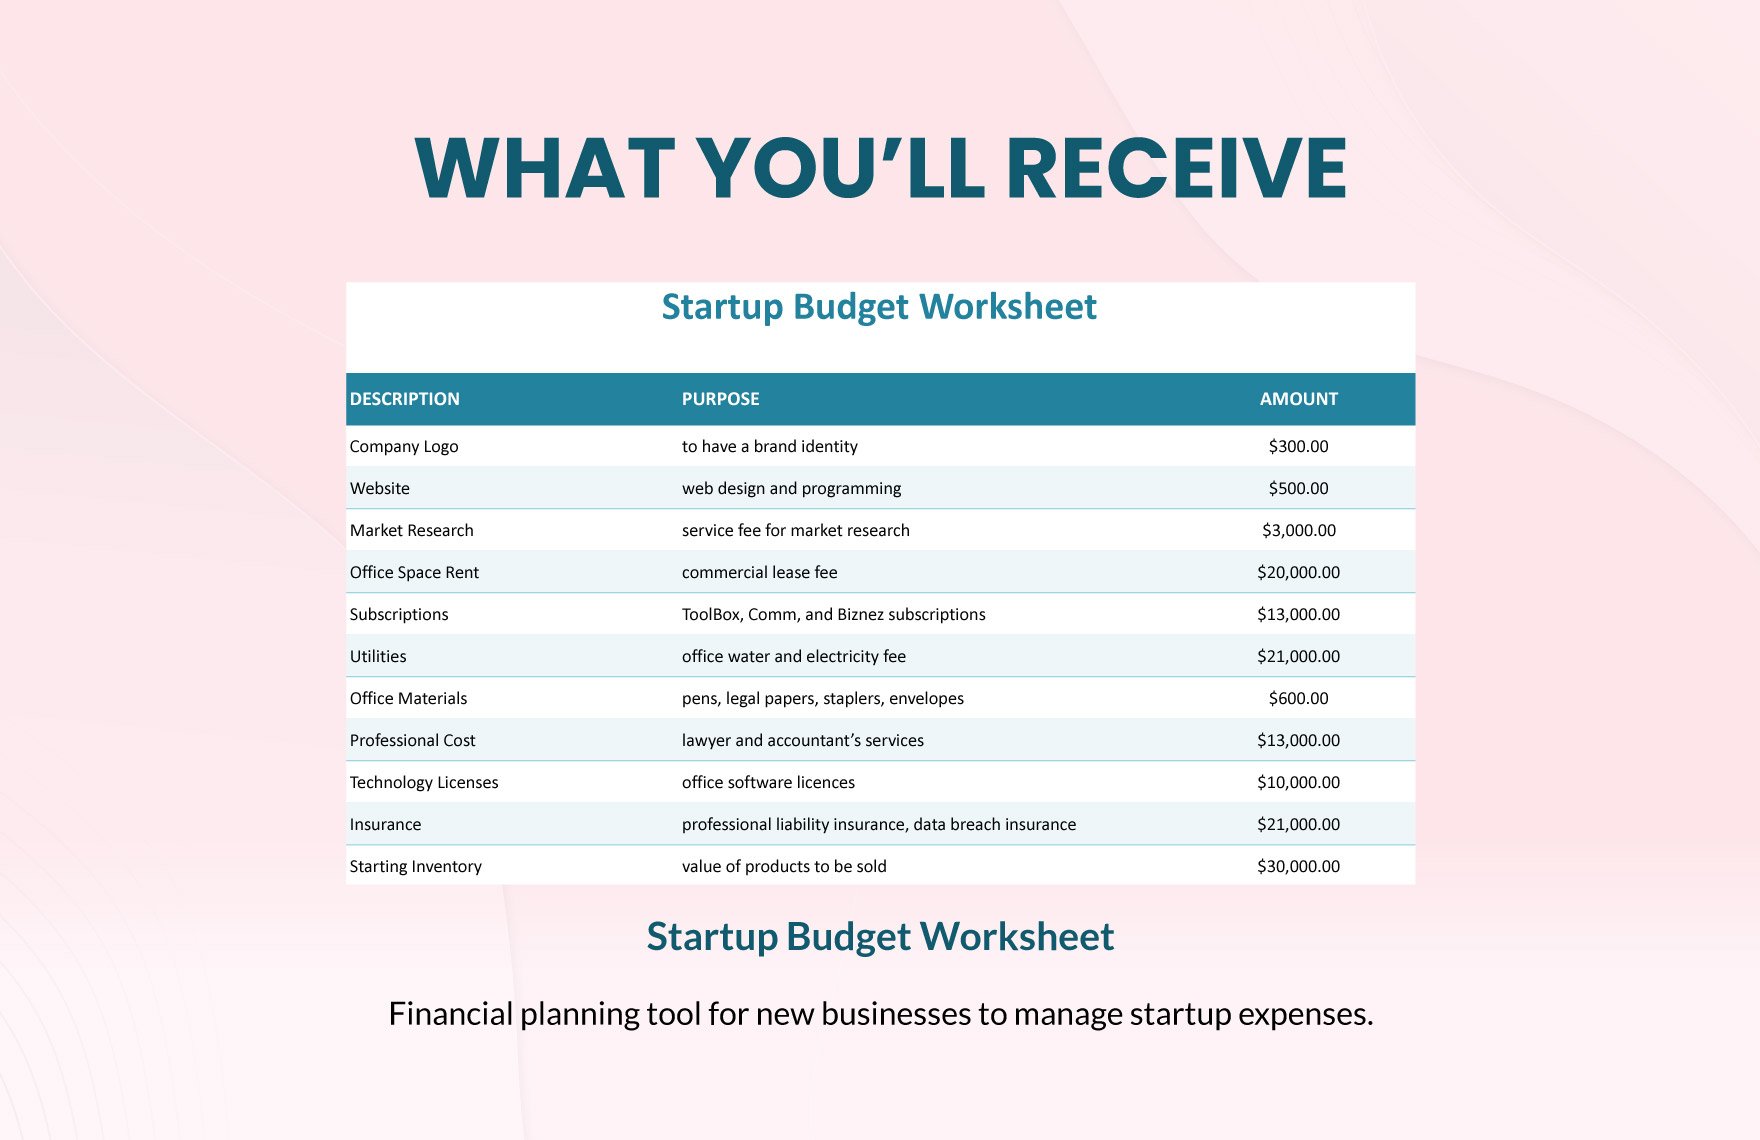 Startup Budget Worksheet Template